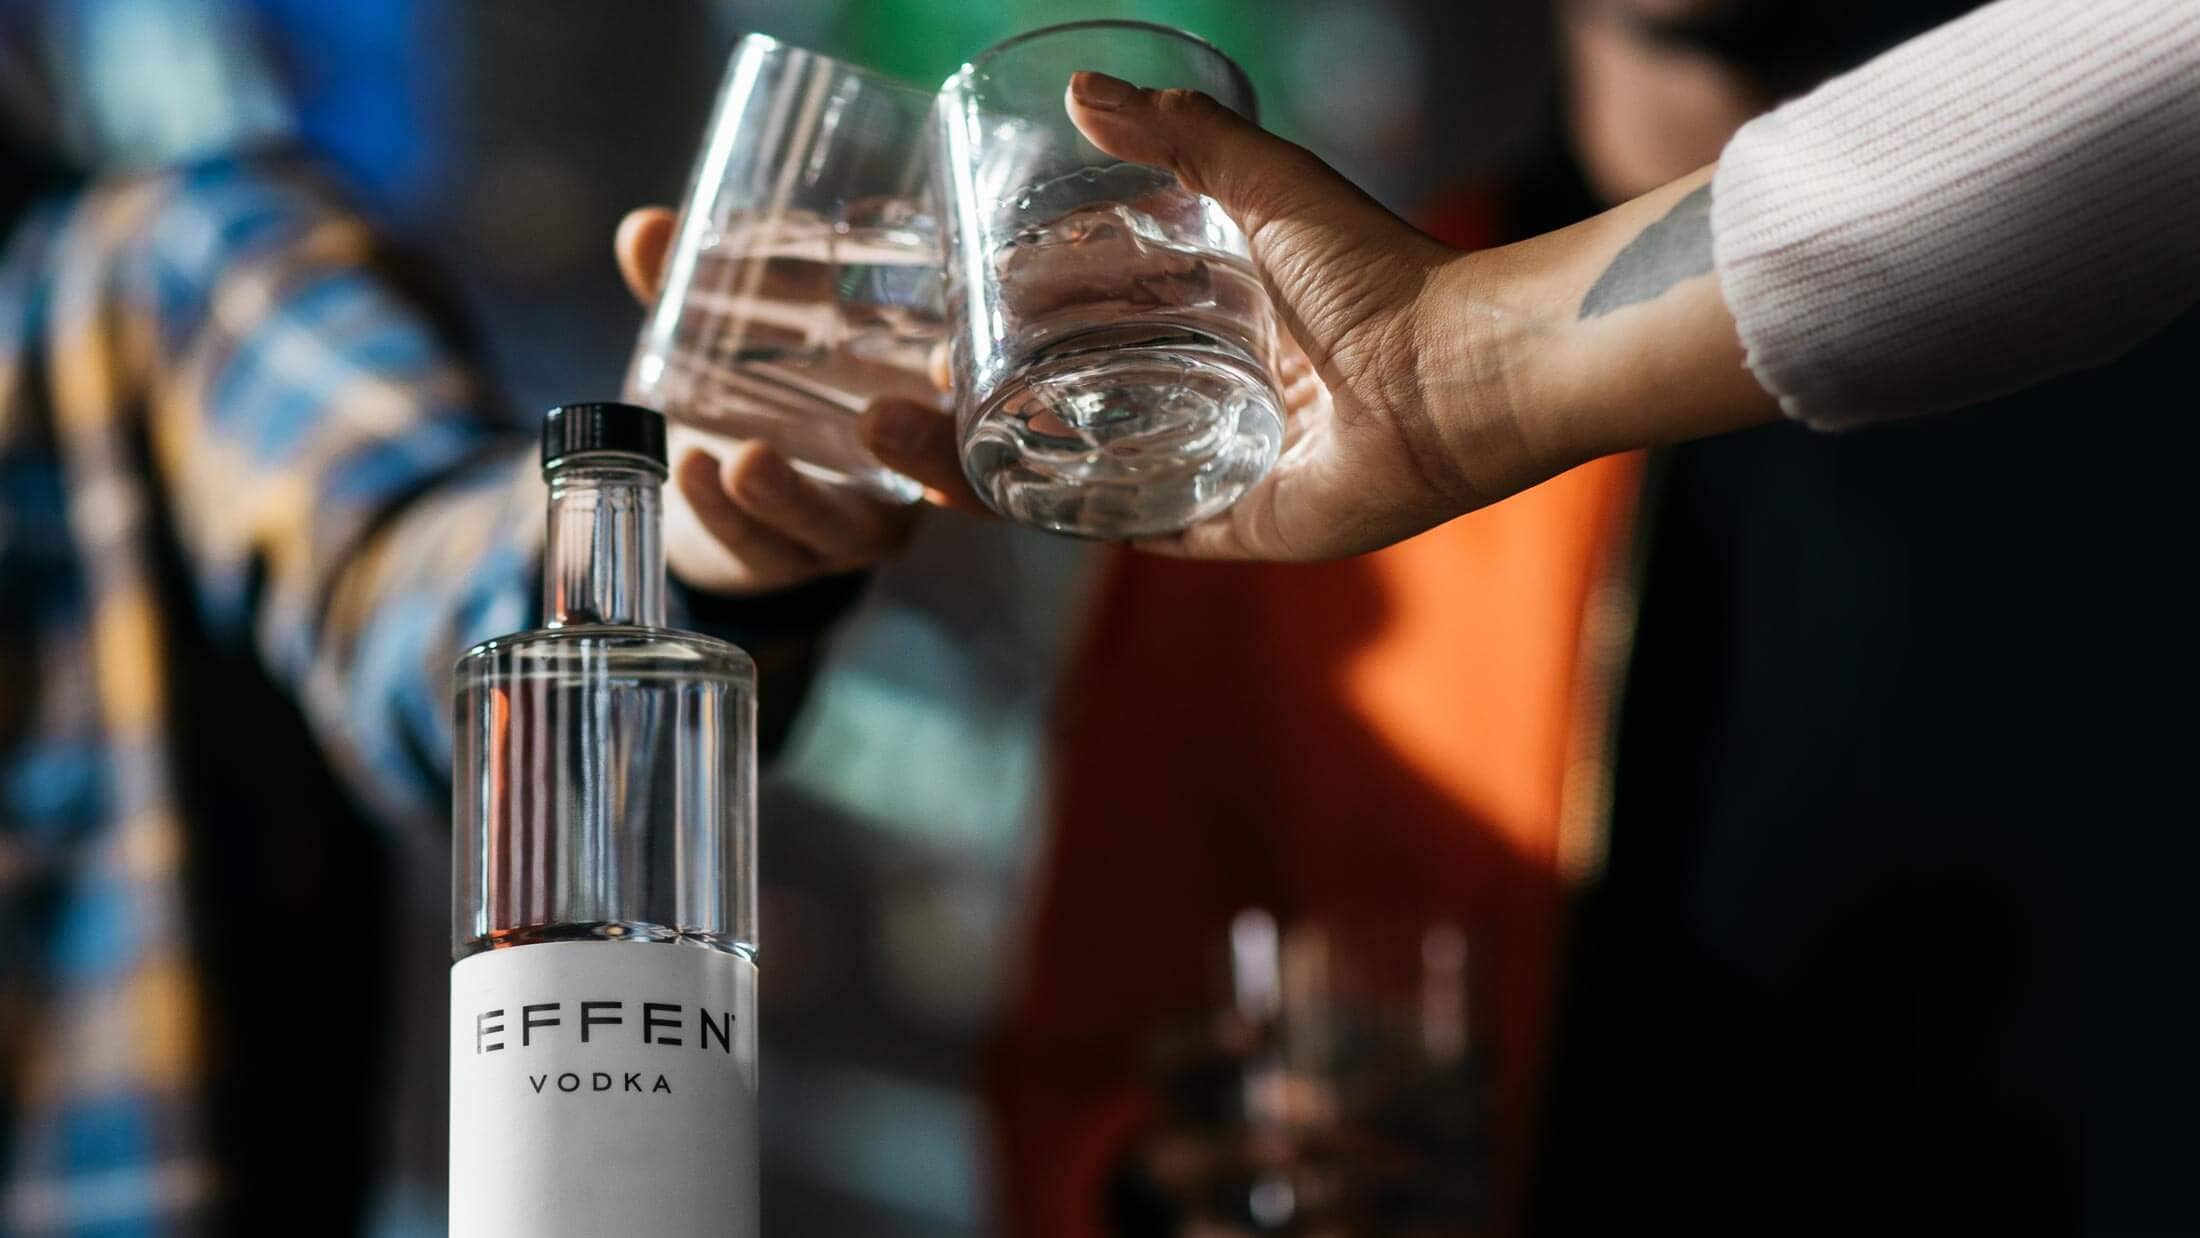 EFFEN is premium dutch vodka and unique premium design - just as unique as you.